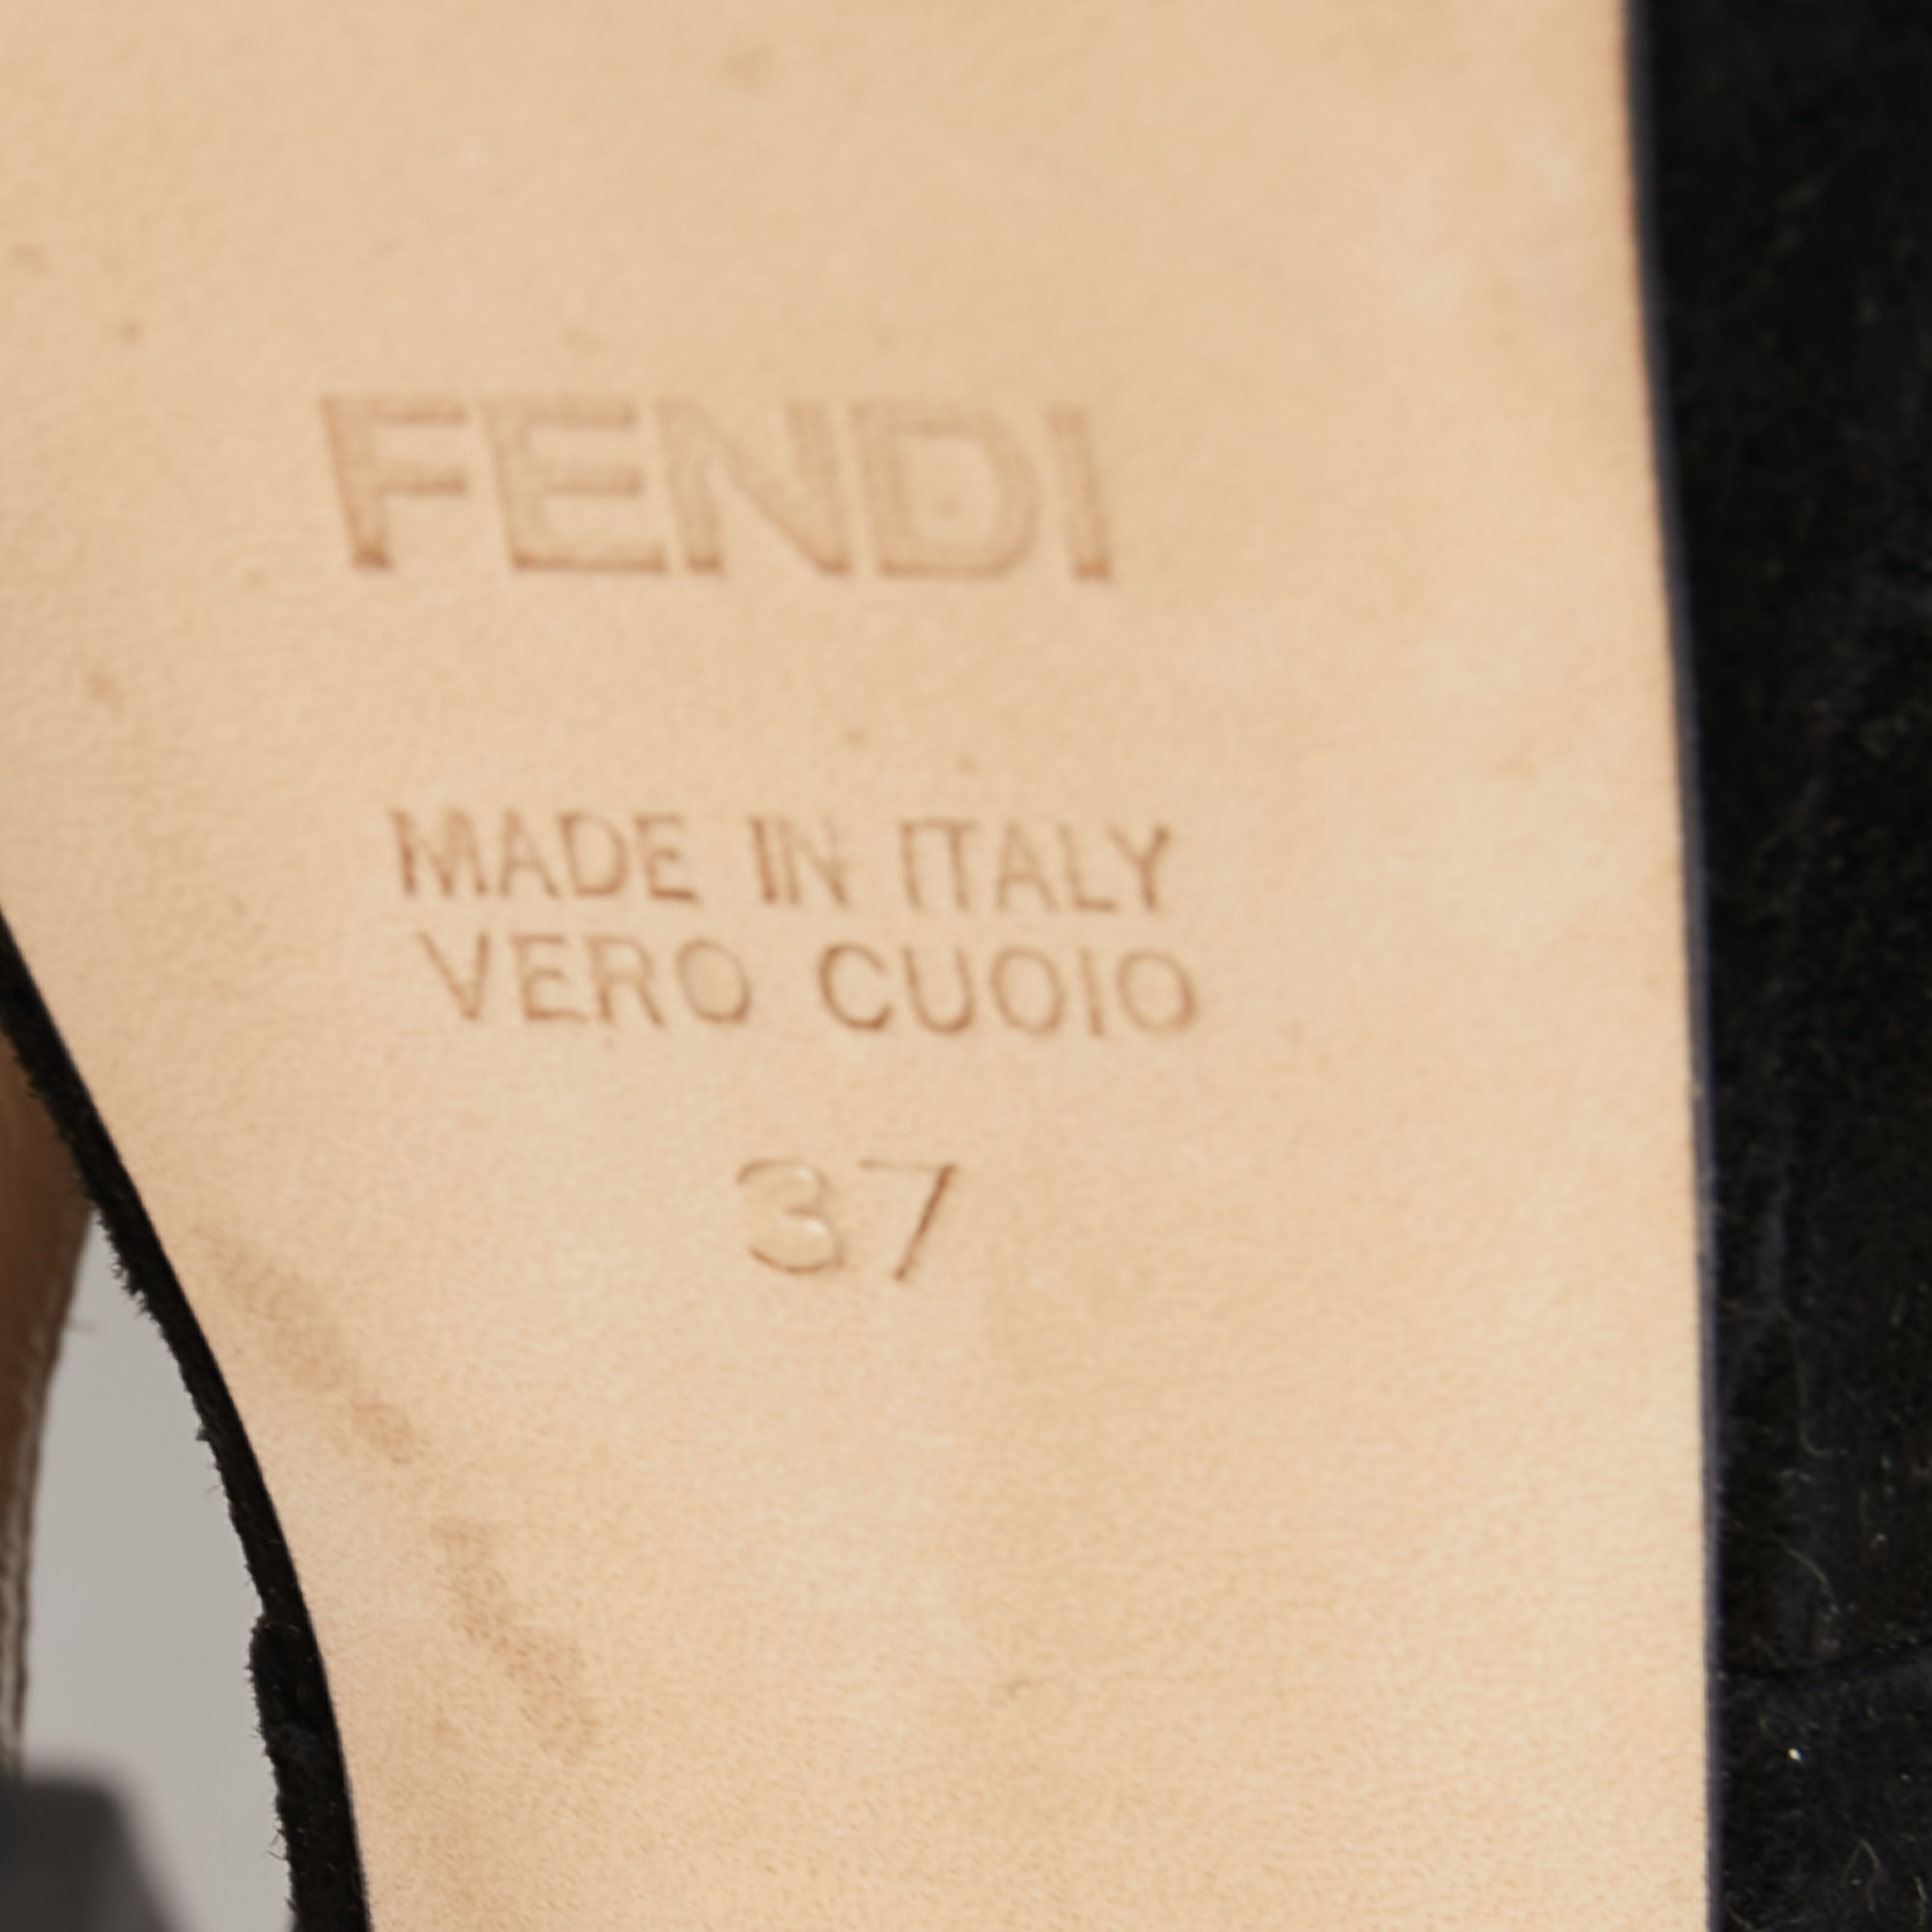 Fendi Black/Gold Leather/Suede Platform Pumps Size 37